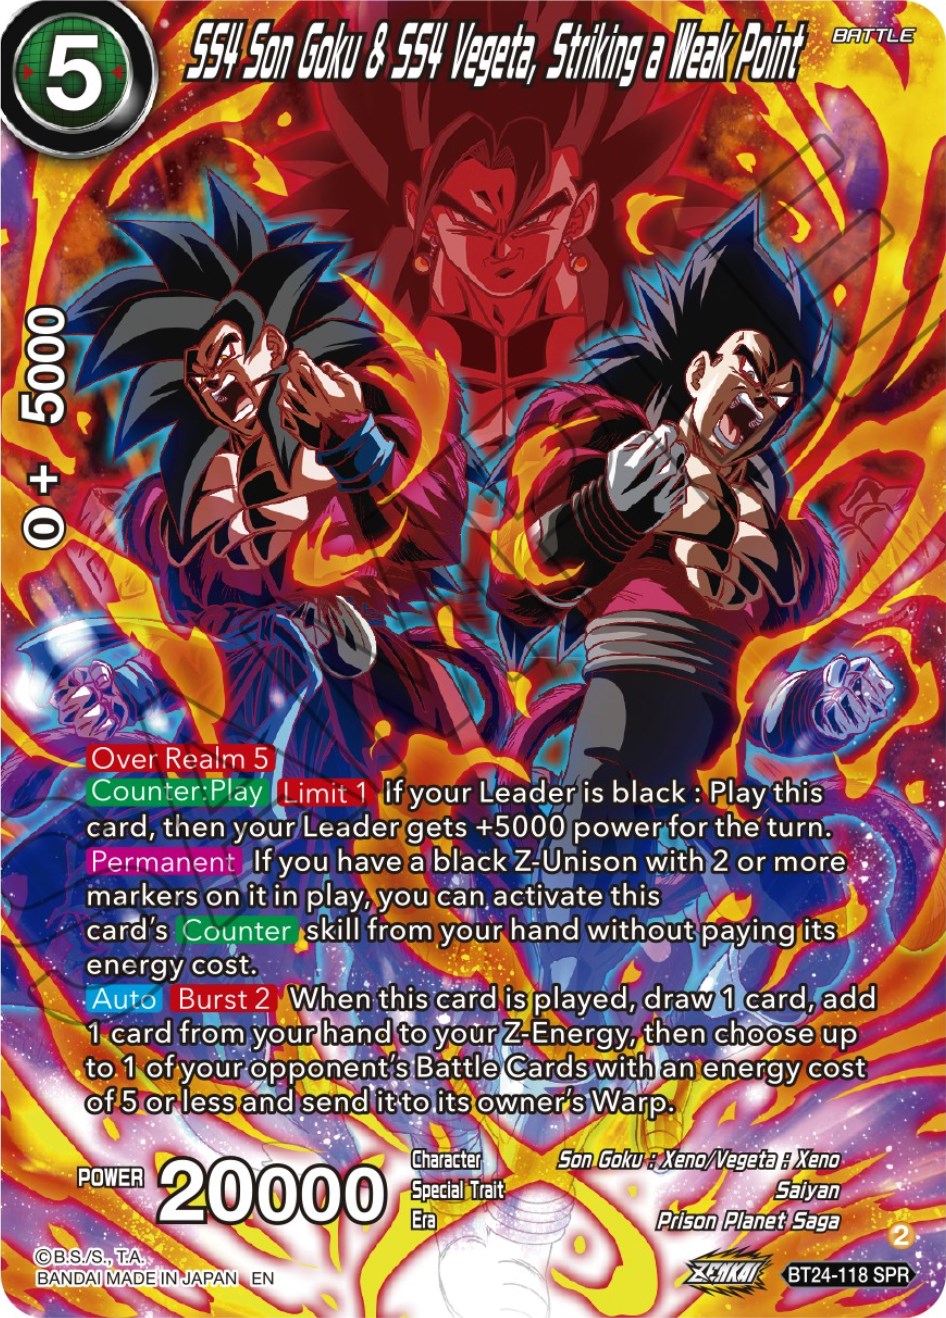 SS4 Son Goku & SS4 Vegeta, Striking a Weak Point (SPR) (BT24-118) [Beyond Generations] | Amazing Games TCG